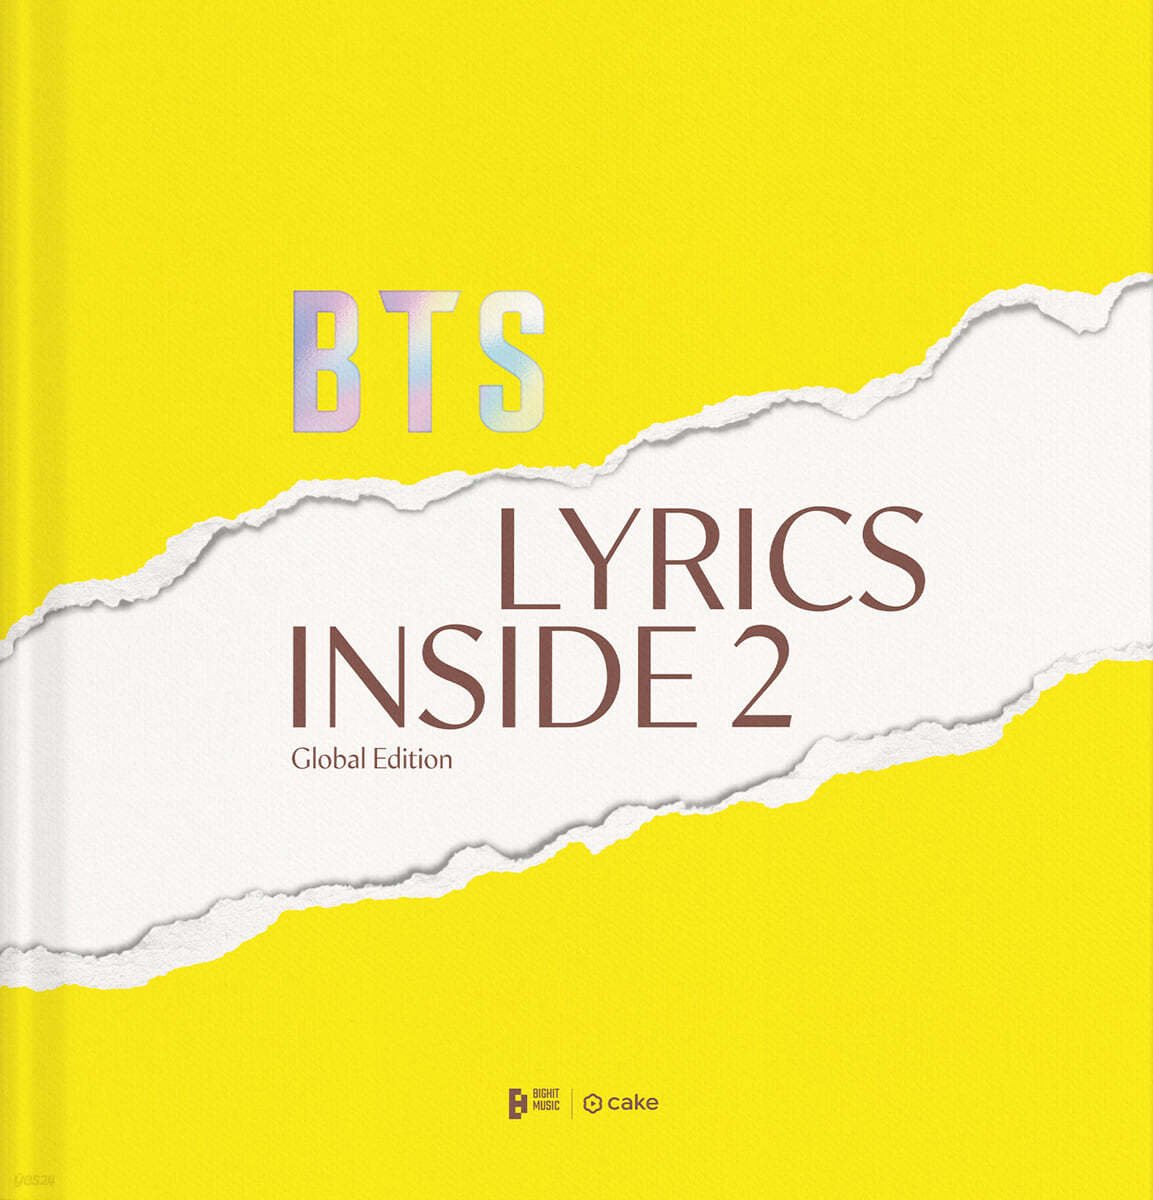 BTS - BTS LYRICS INSIDE 2 – Kpop Planet